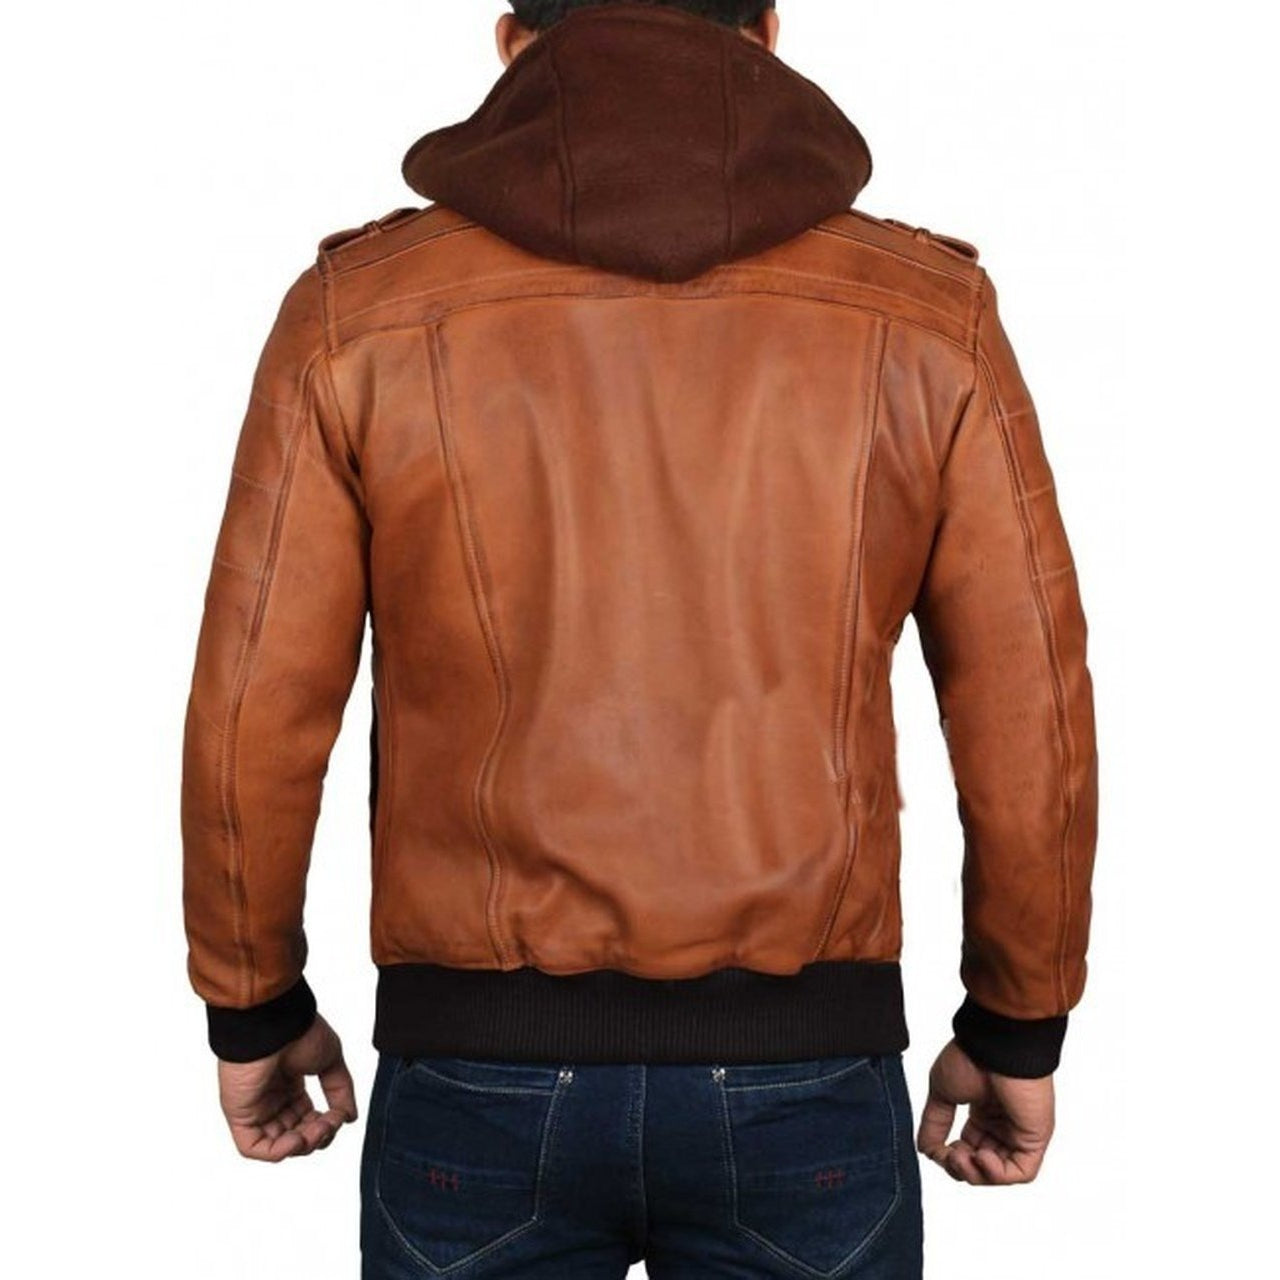 Brown Hooded Leather Jacket for Men - Leather Jacket